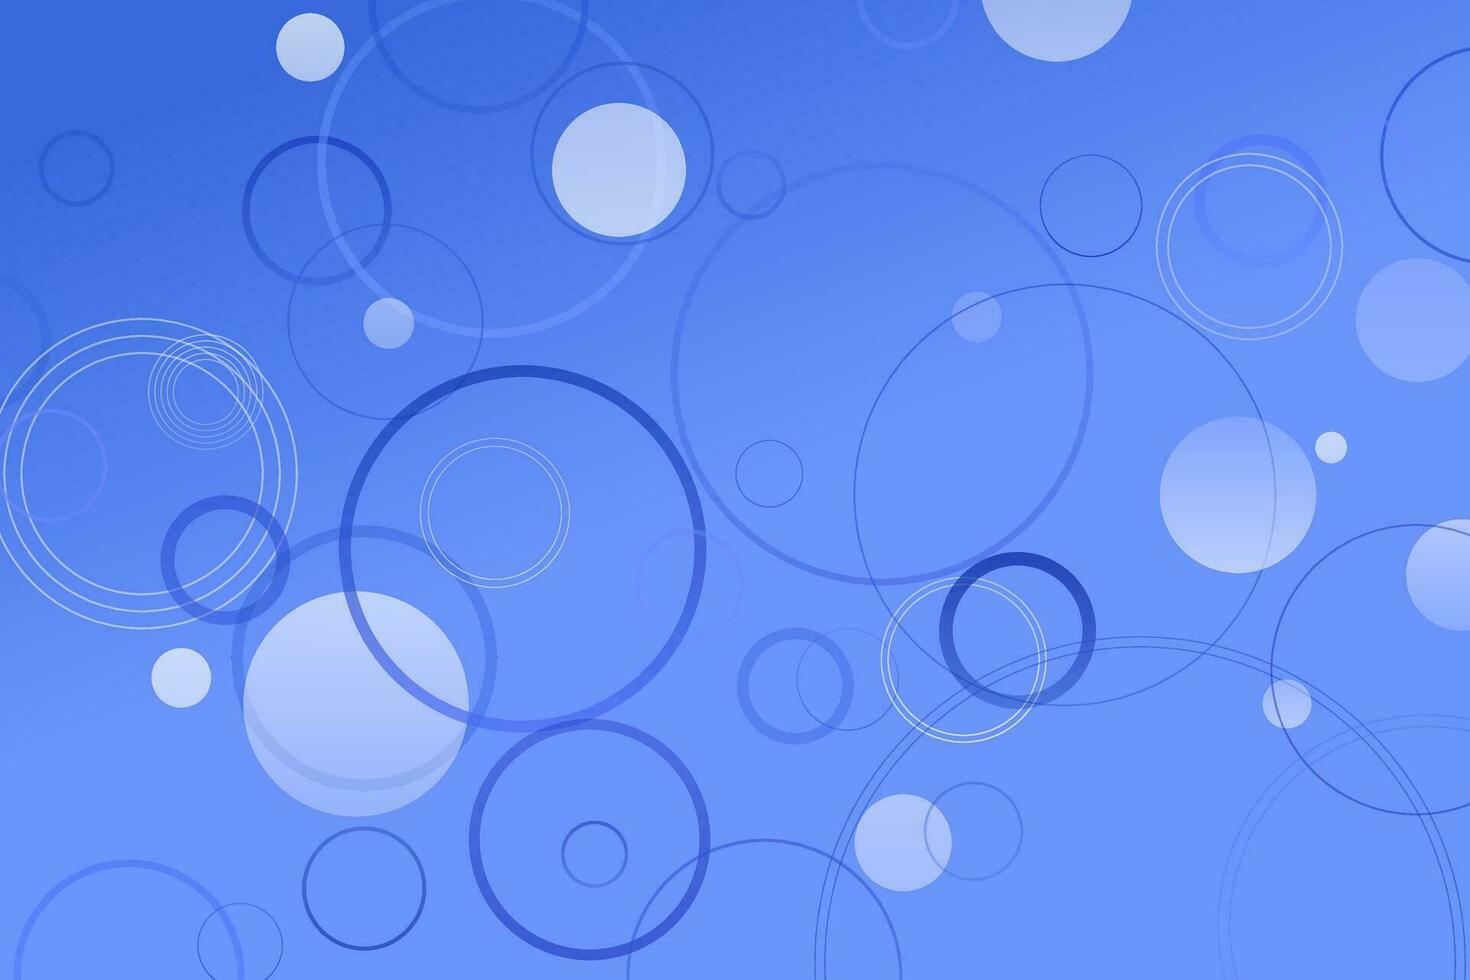 azul círculo rede página fundo - geométrico vetor gráfico com círculos